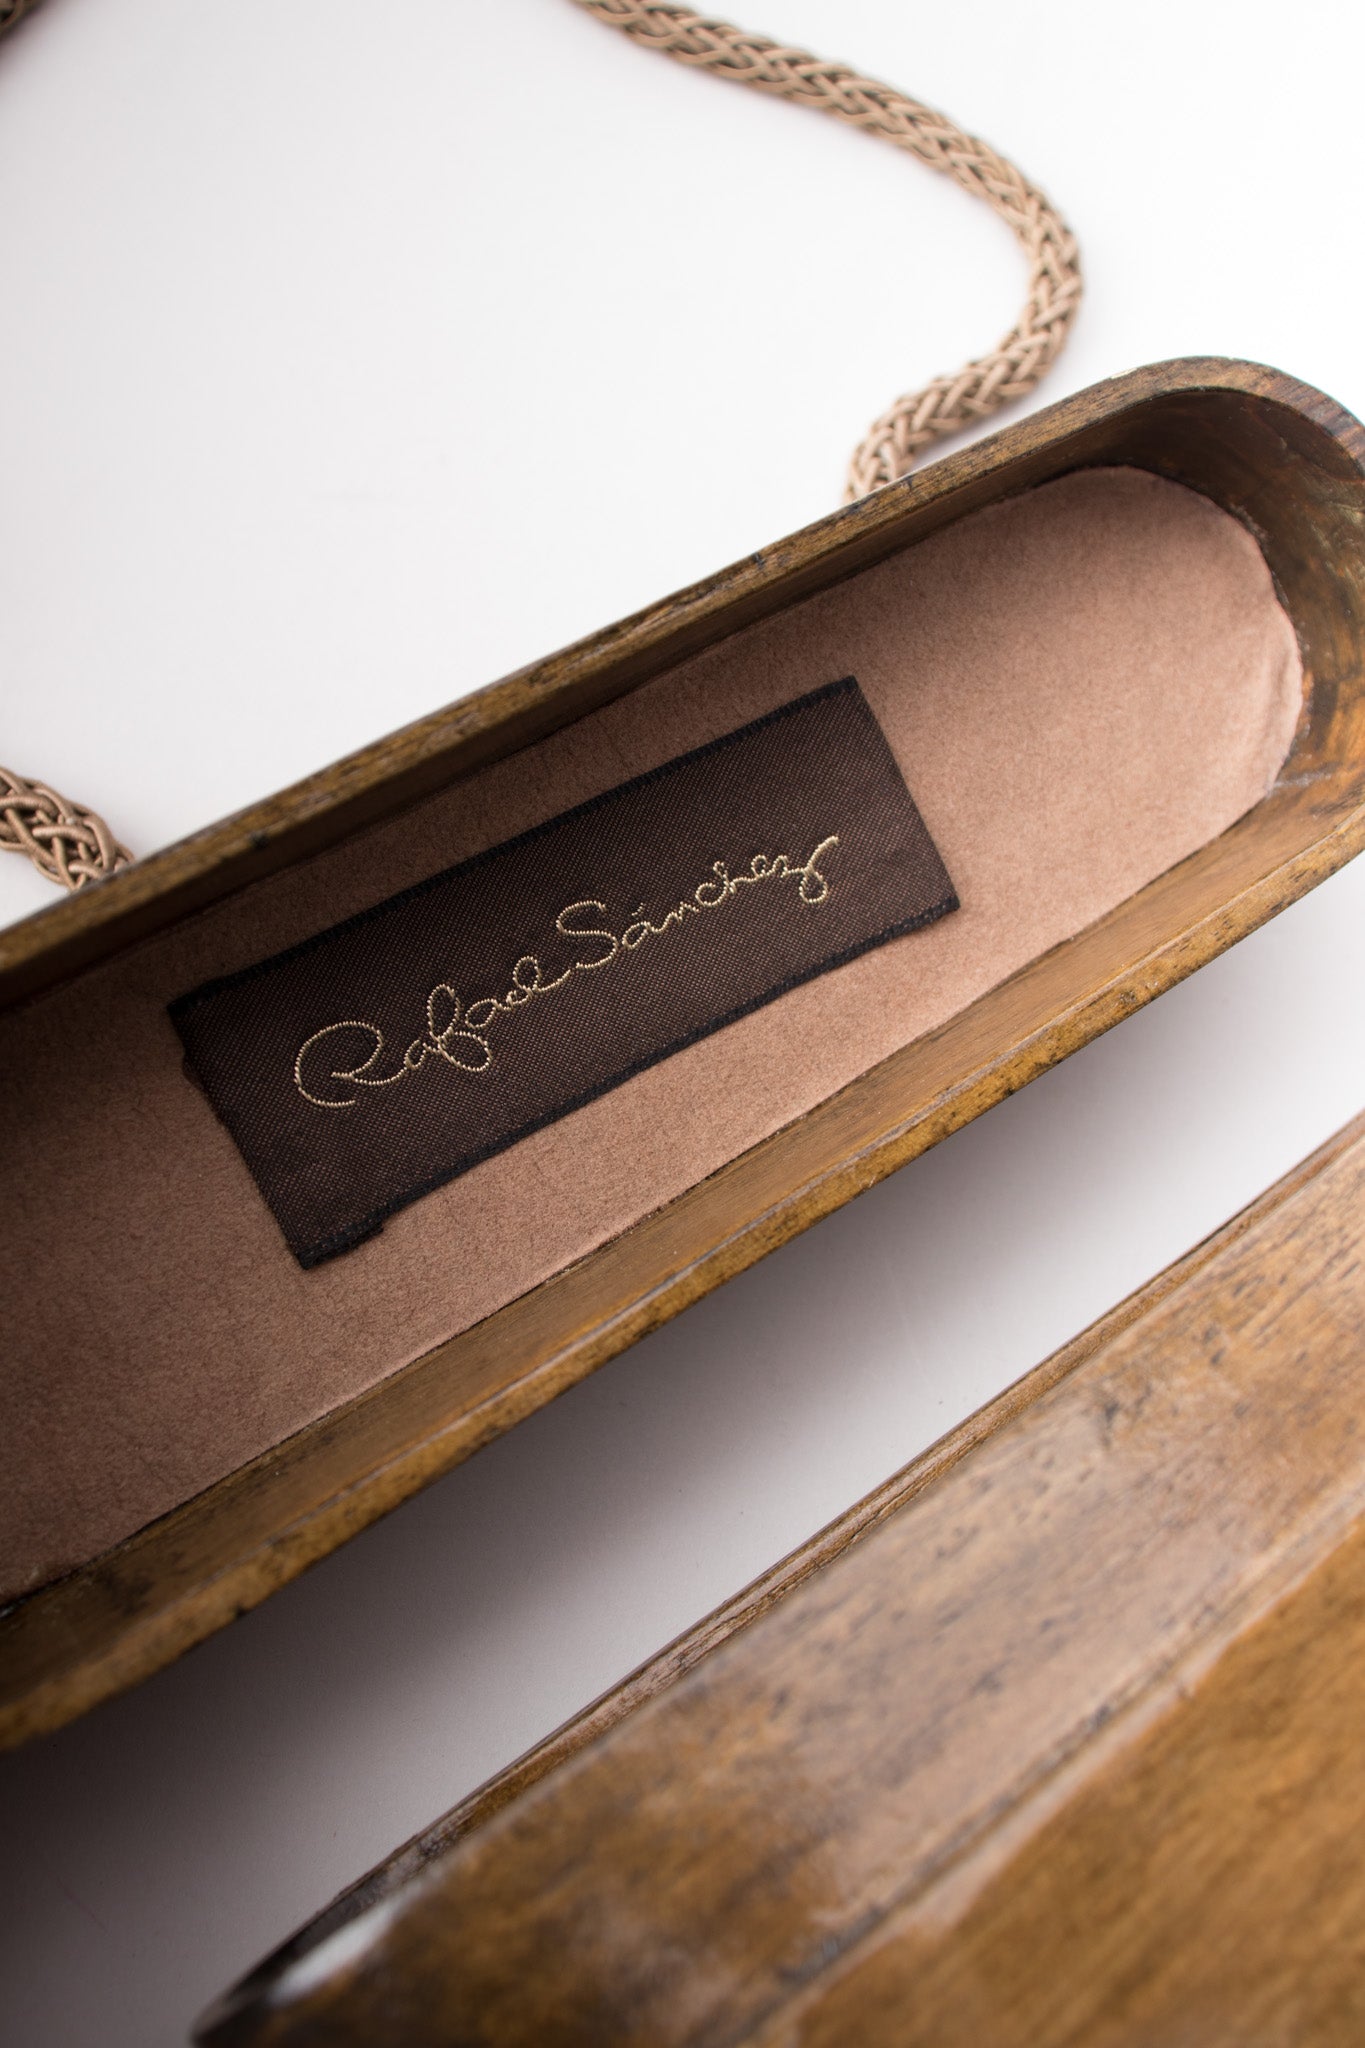 Rafael Sanchez Carved Wooden Boat Tassel Box Bag Purse